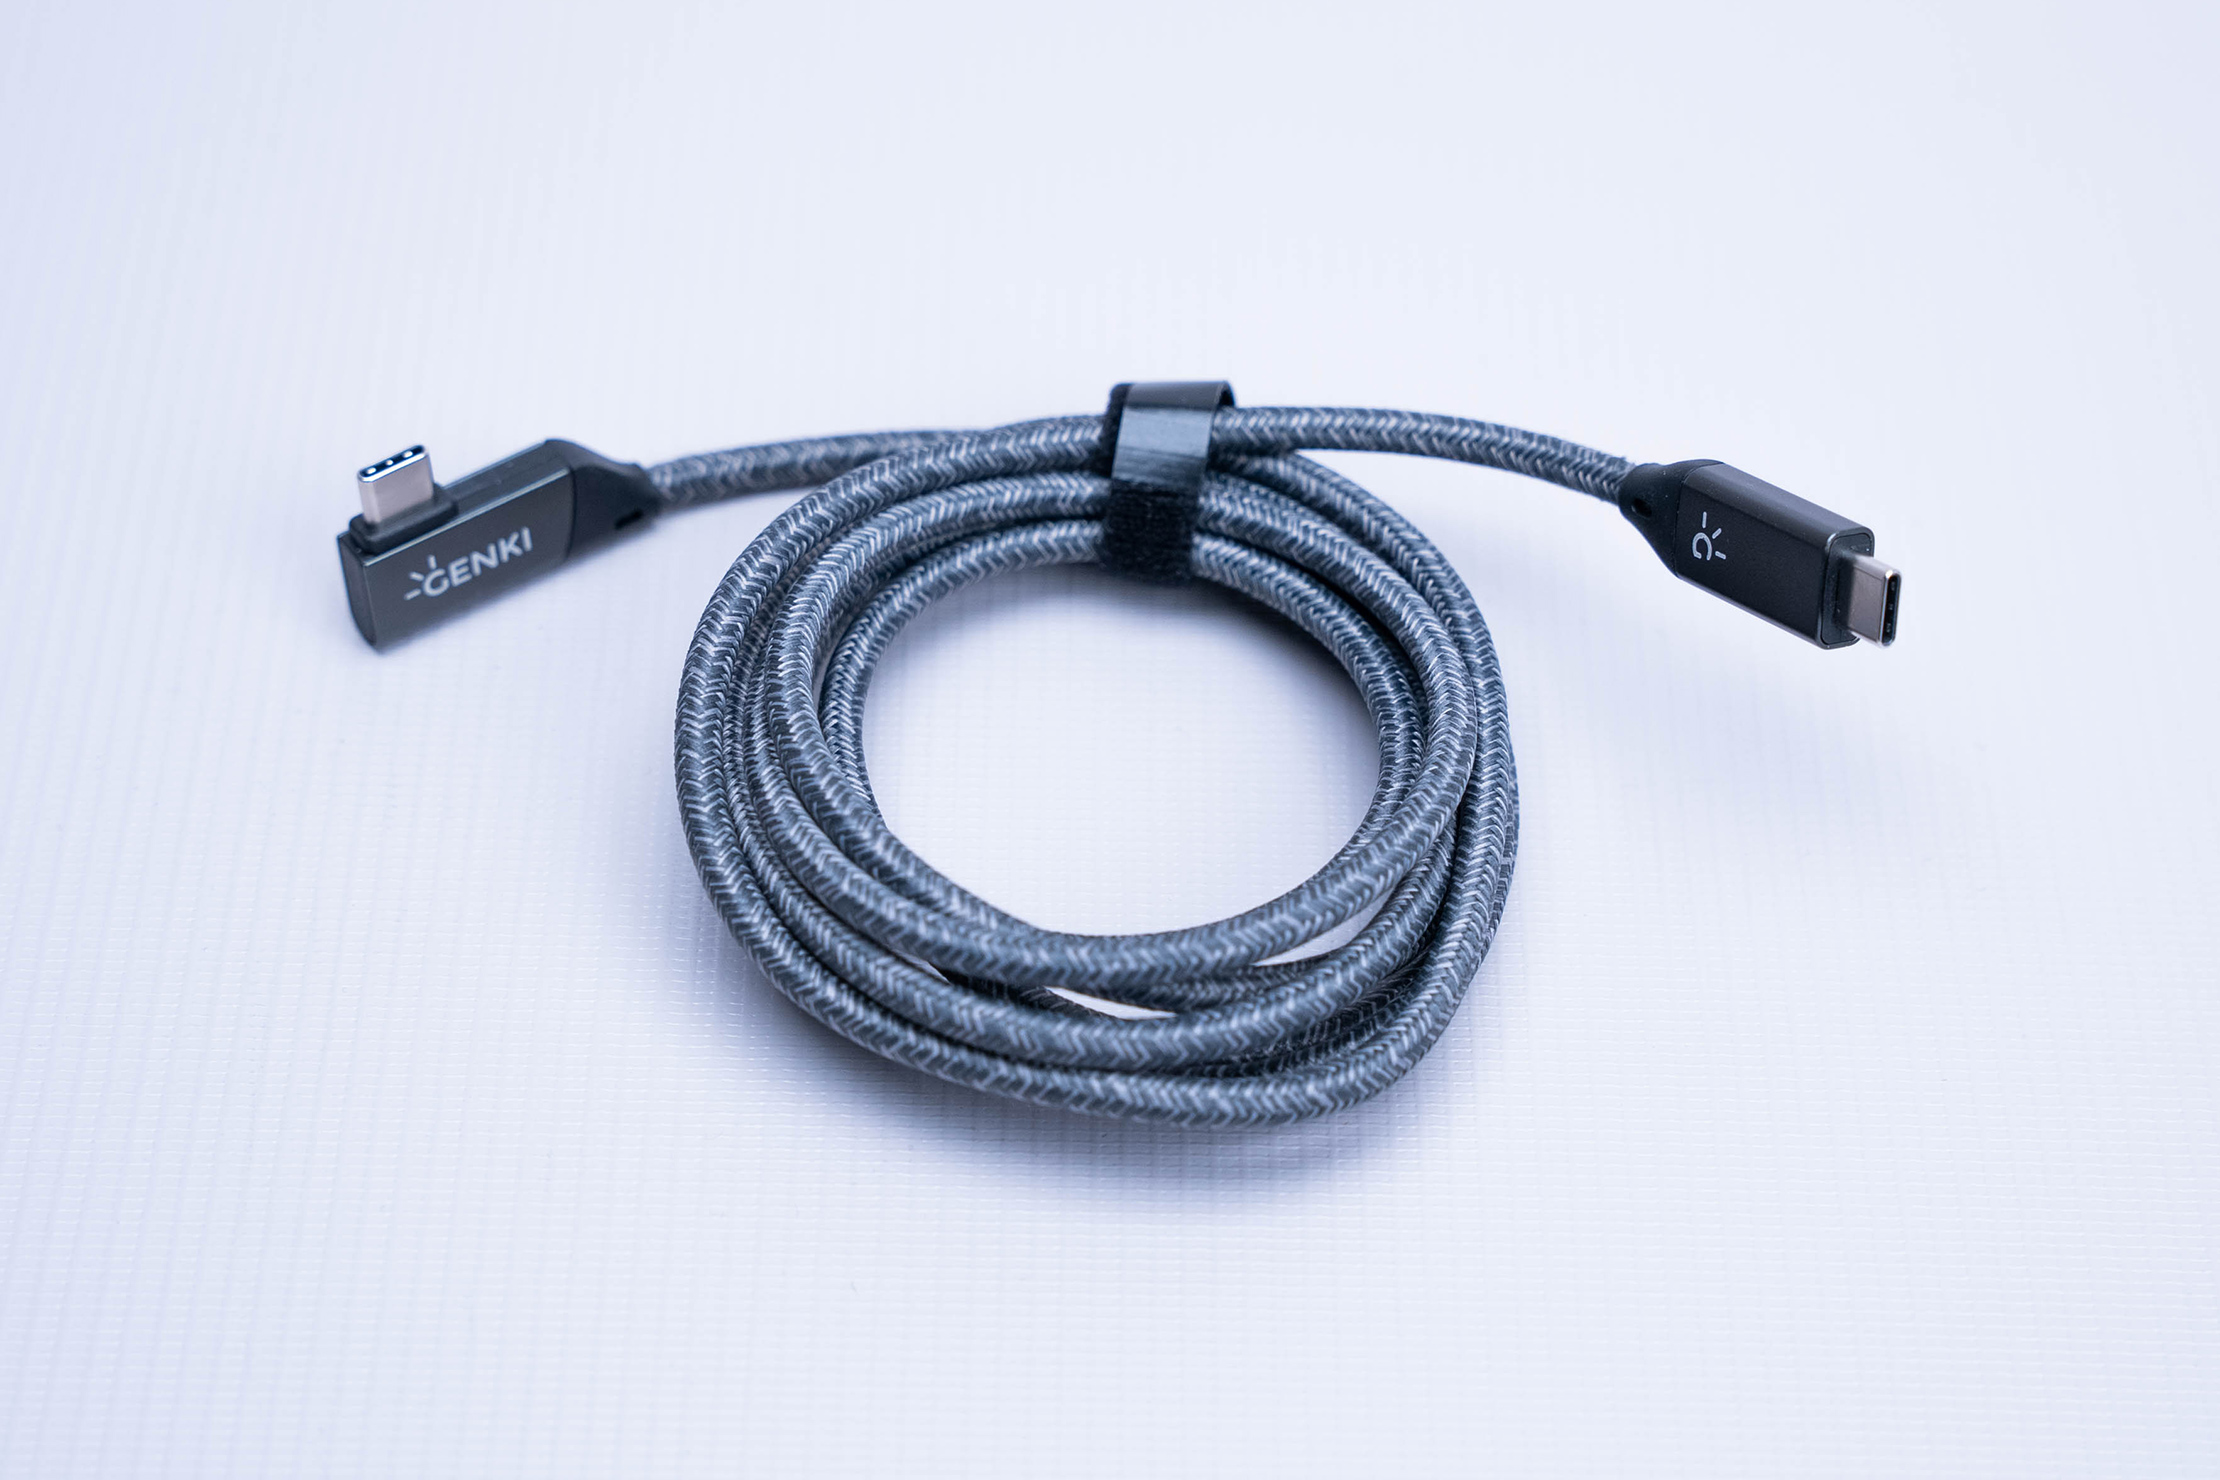 Genki Covert Dock Mini Cable